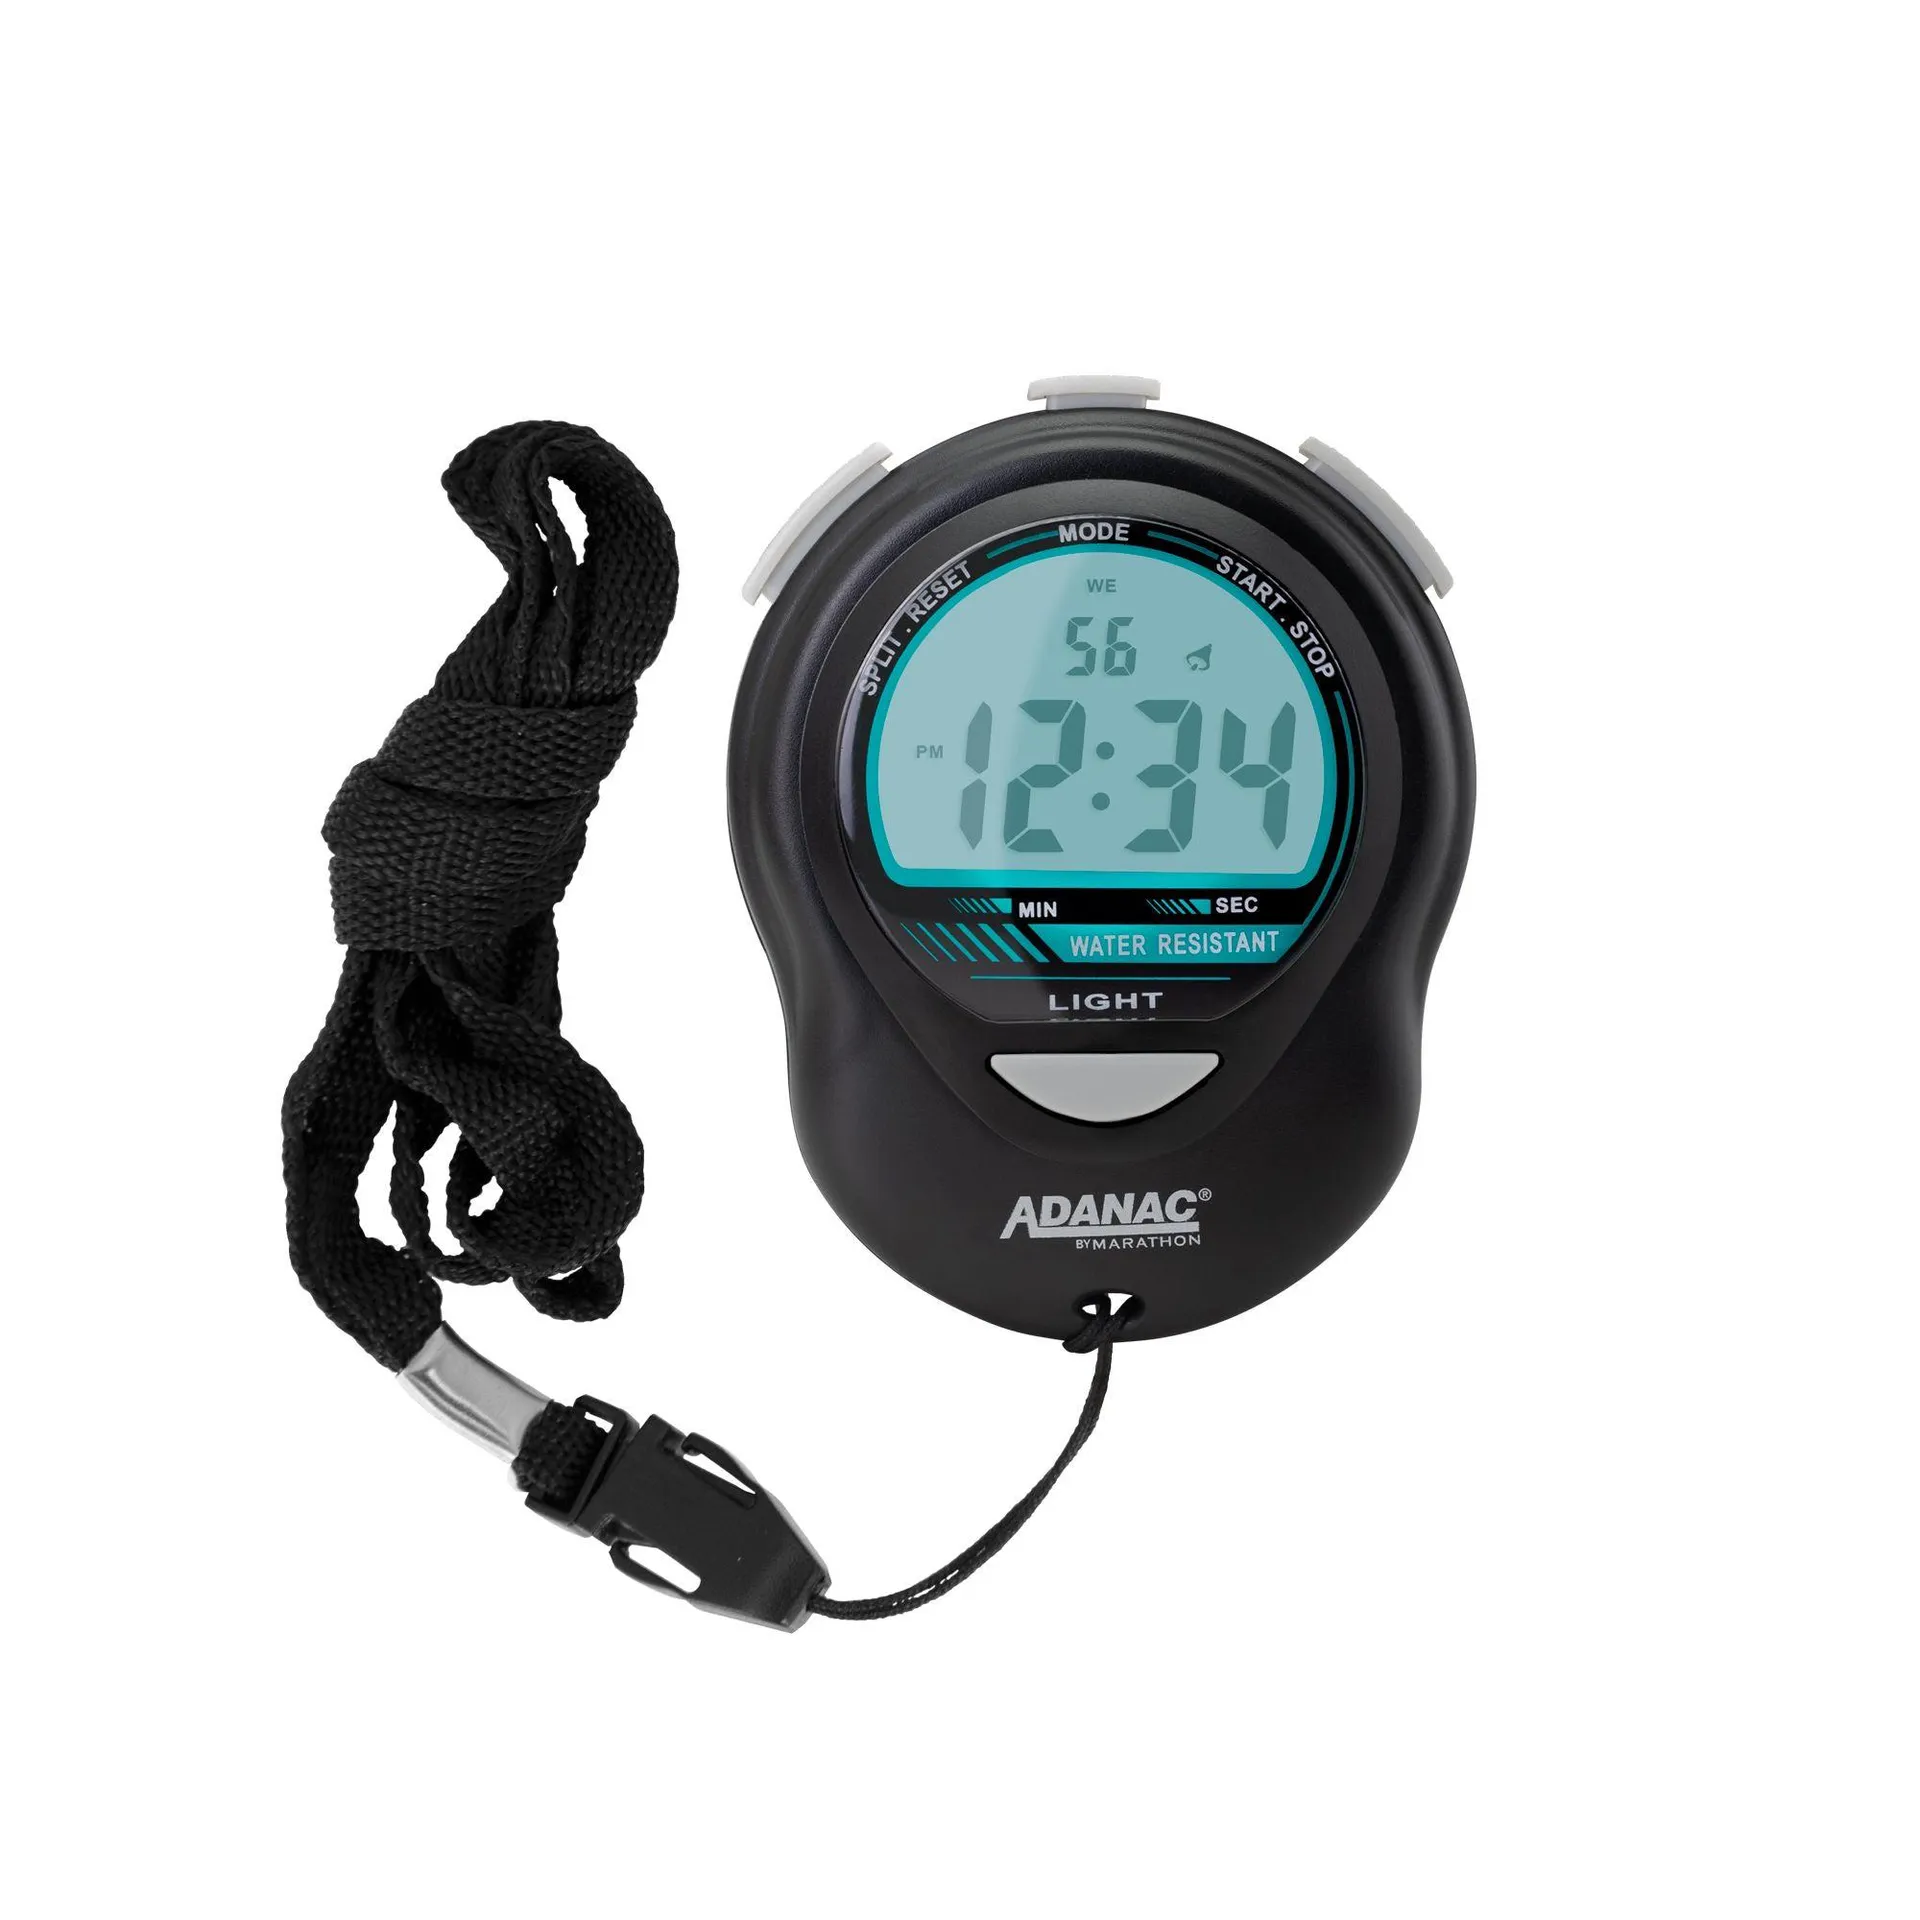 Marathon ADANAC Digital Jumbo-Display Superglow Stopwatch